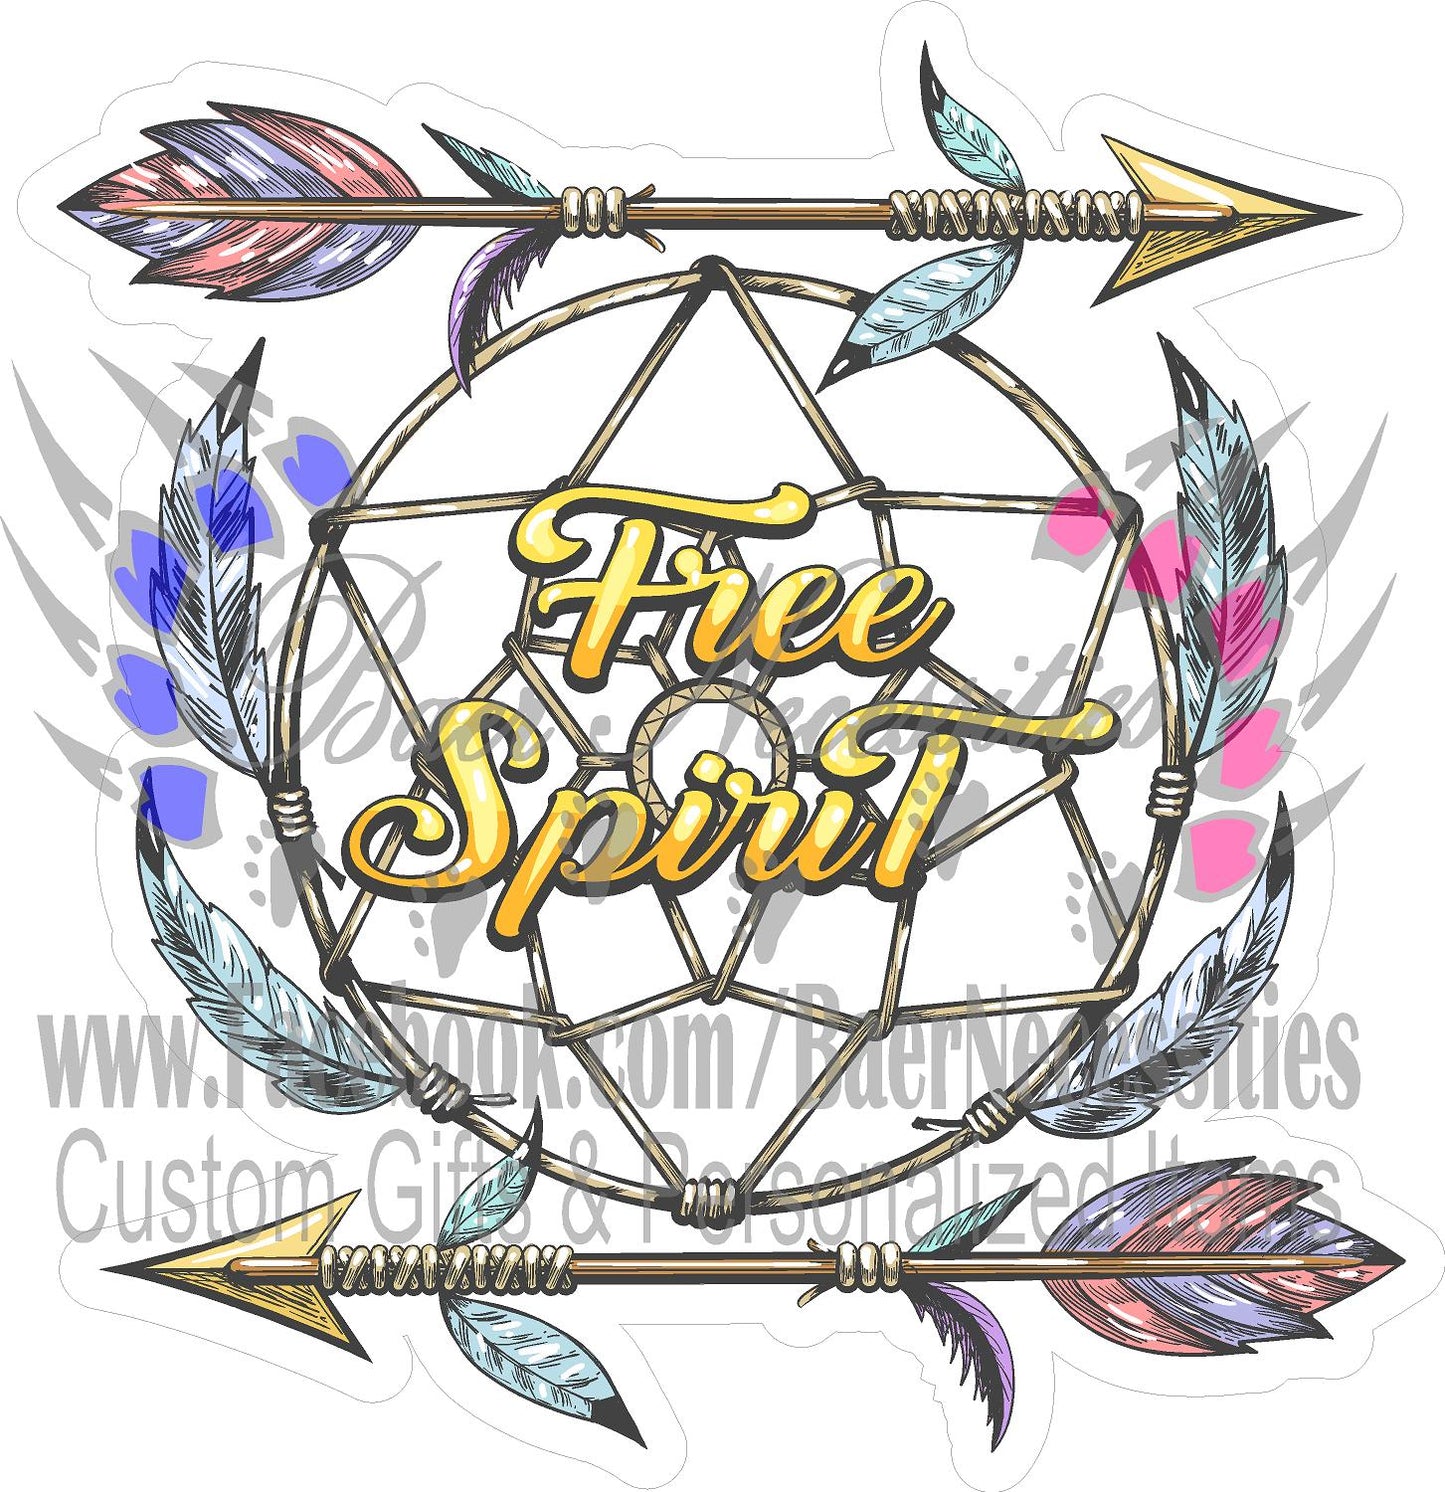 Free Spirit Dream Catcher - Tumbler Decal